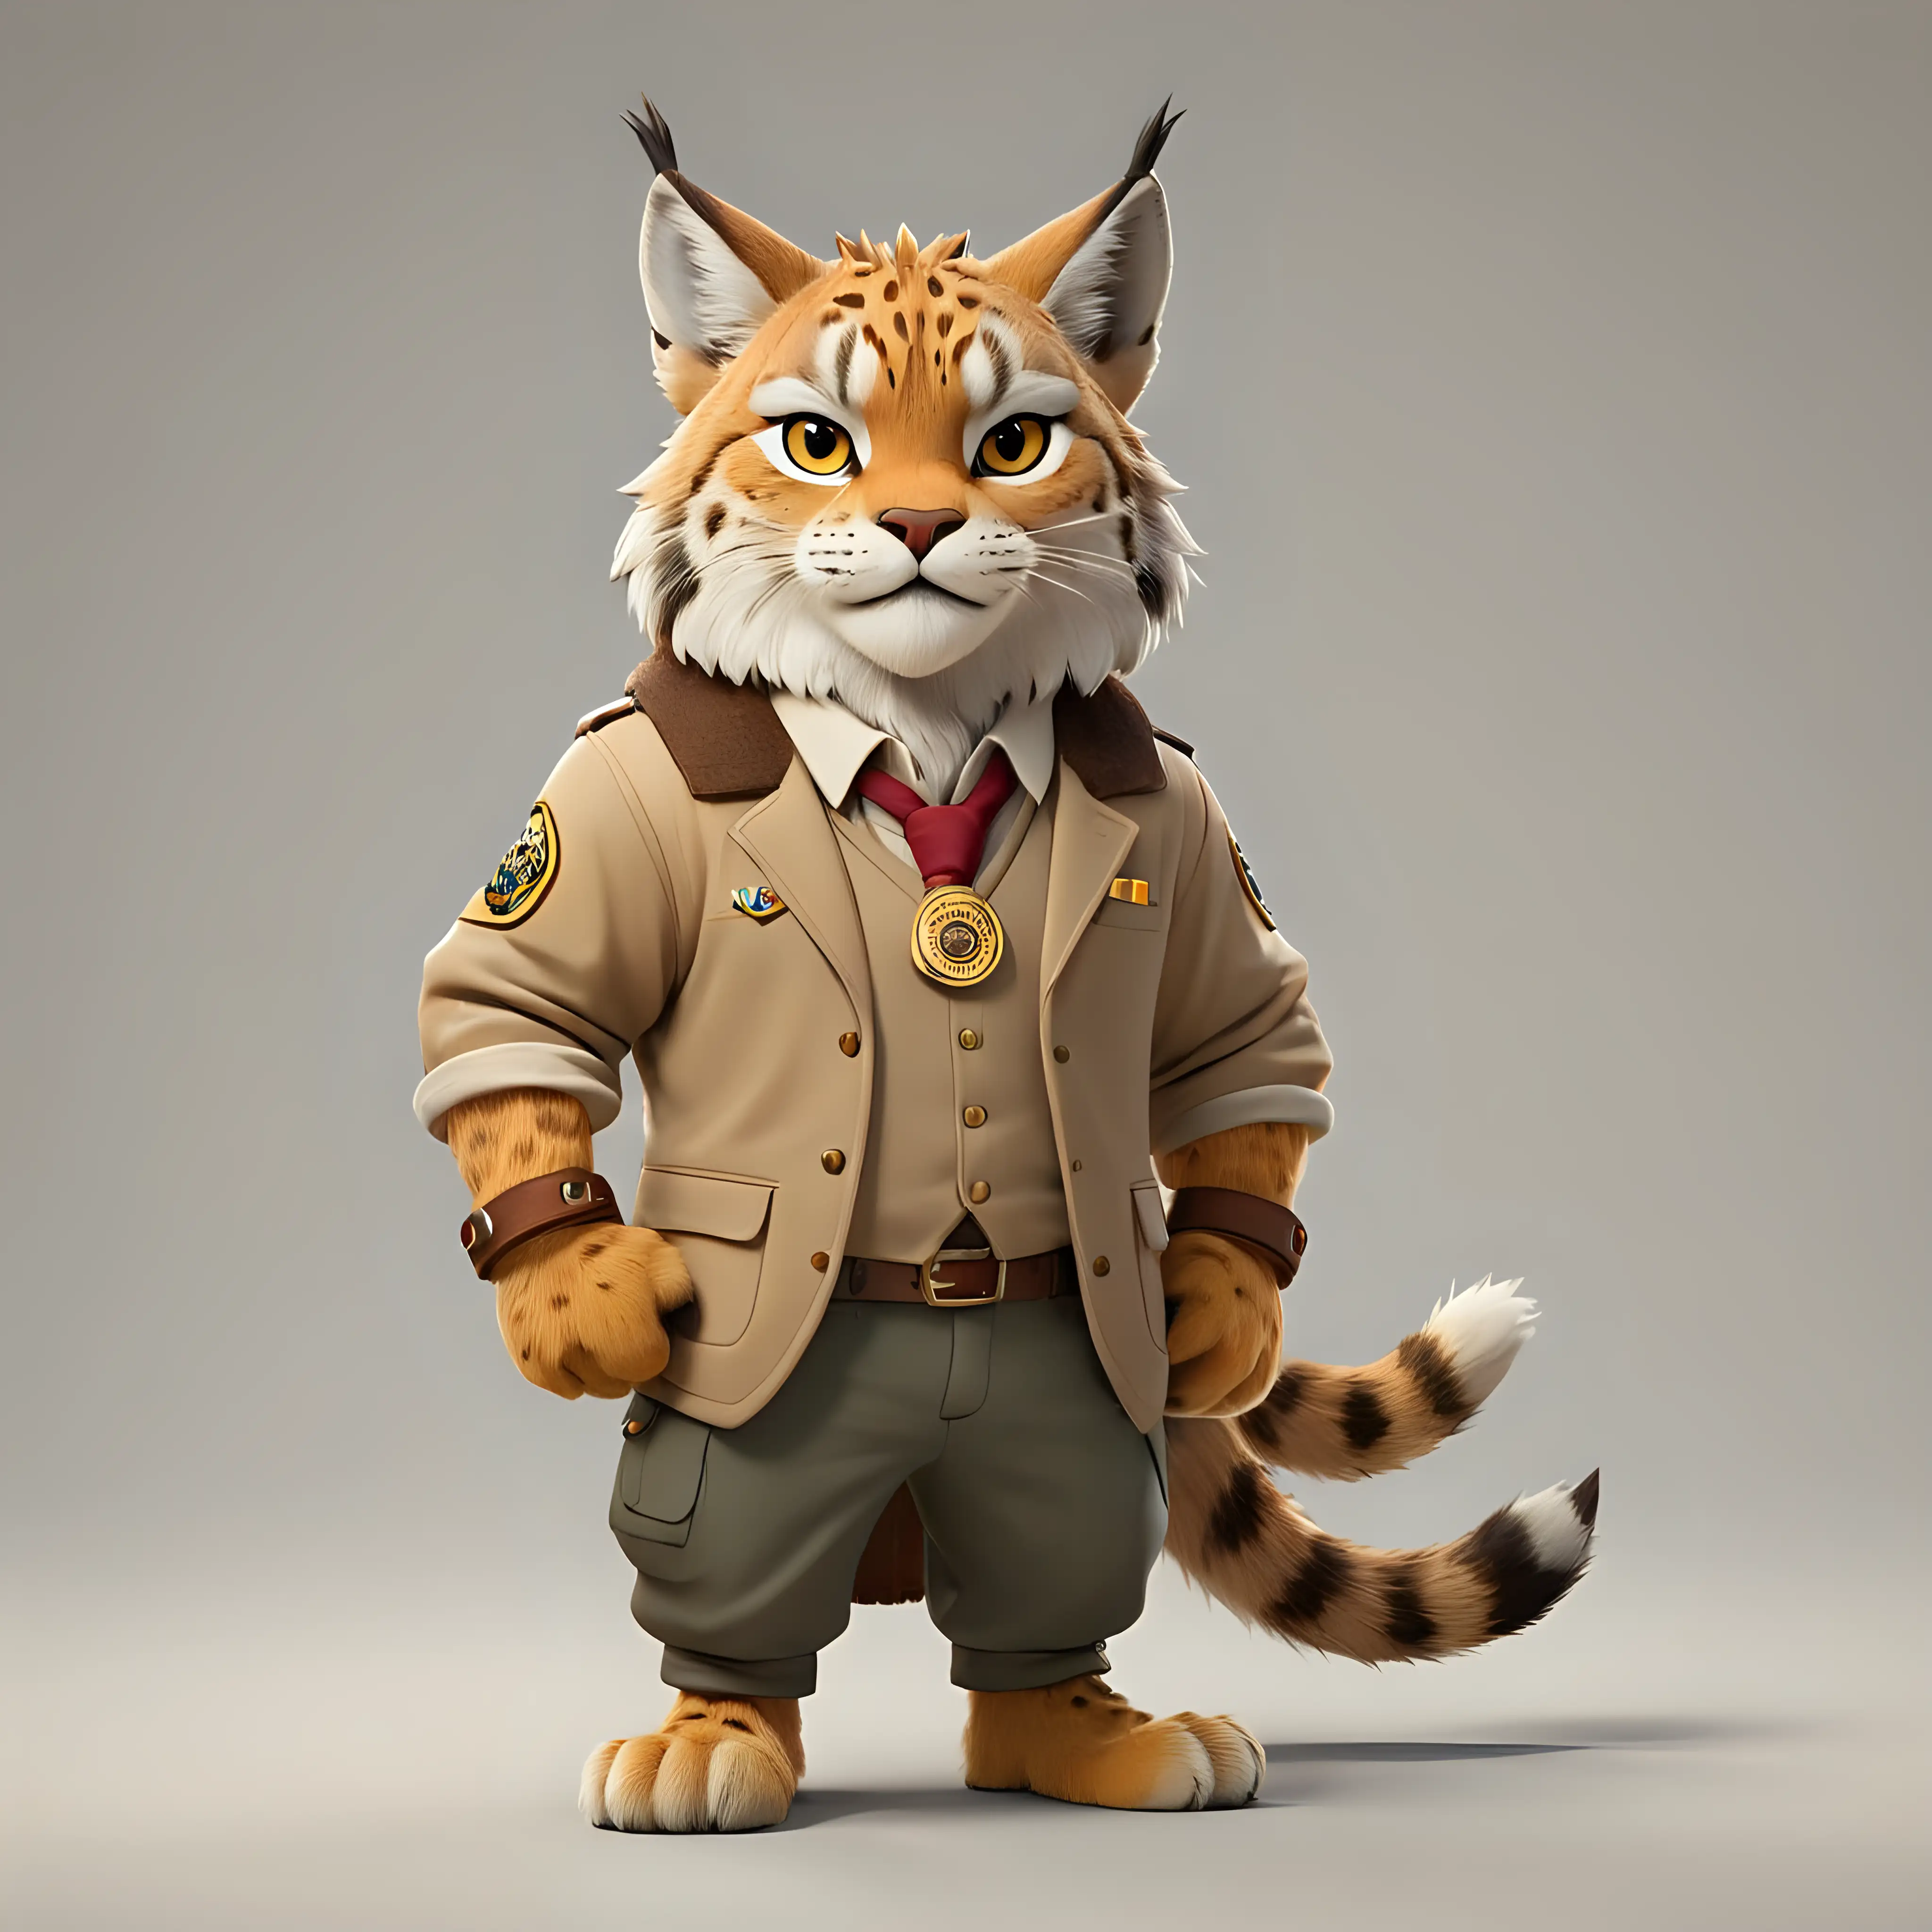 Mayor Lynx Cartoon Character in Formal Attire